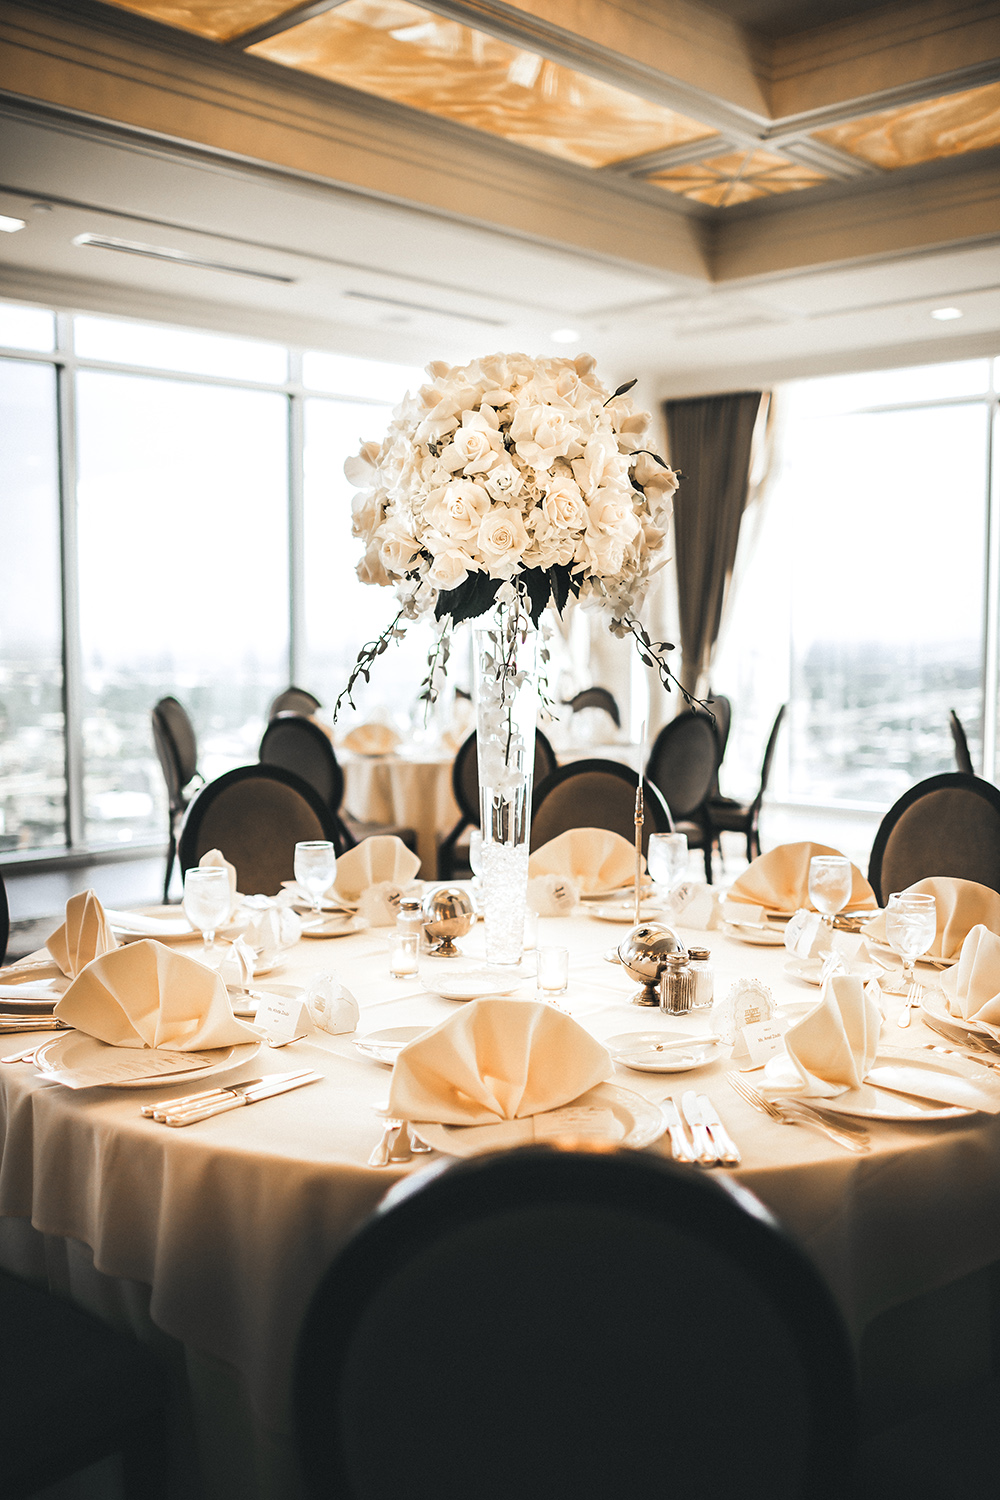 wedding reception decor - table setting - floral centerpiece 